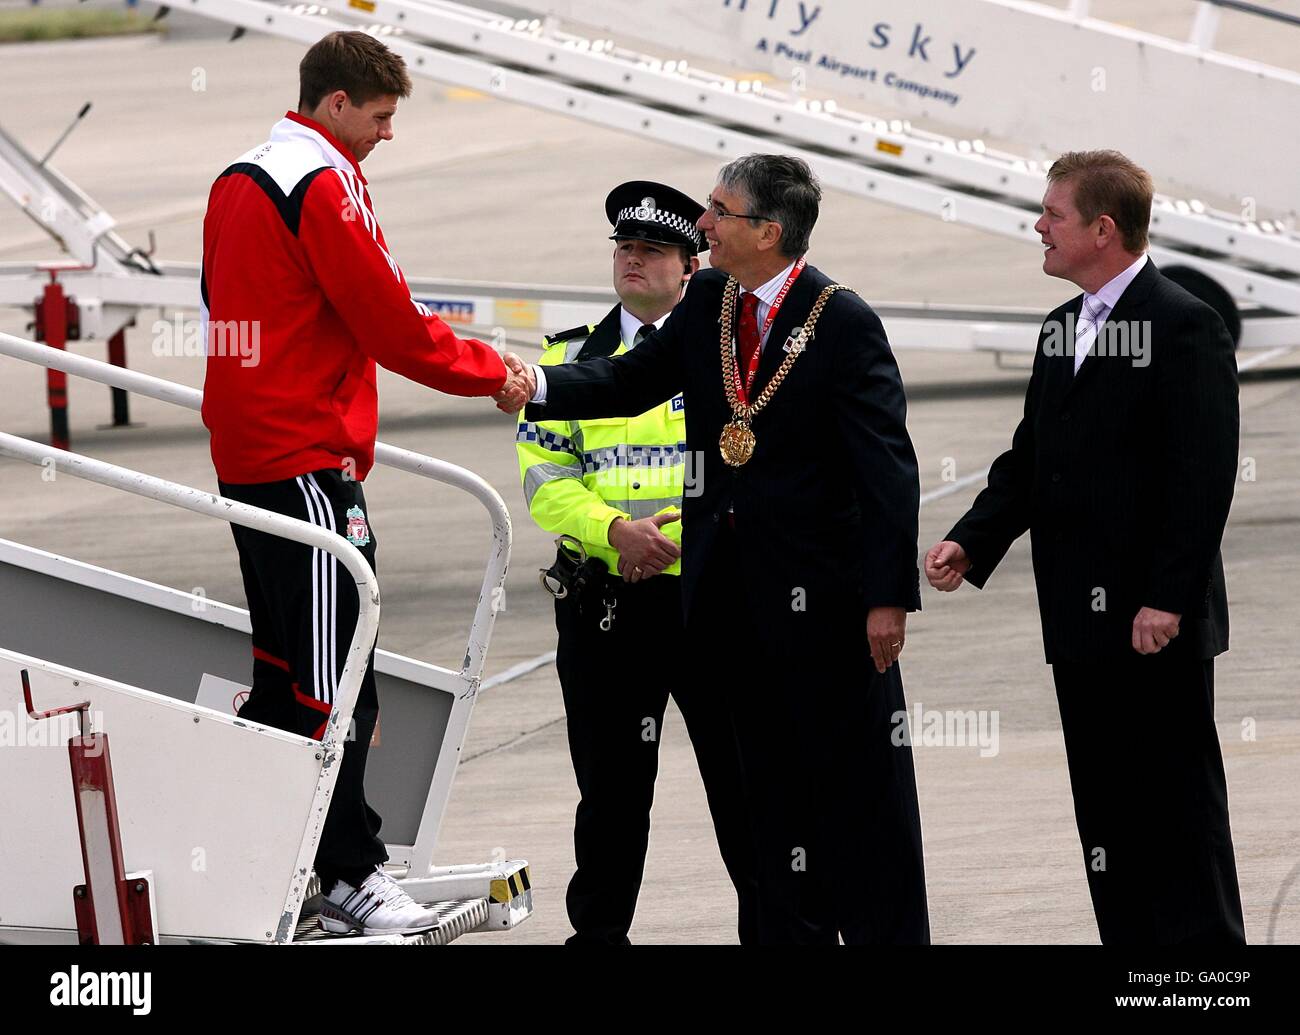 Soccer - UEFA Champions League - Liverpool Players return to John Lennon Airport. Liverpool's Steven Gerrard arrives back at John Lennon Airport Stock Photo